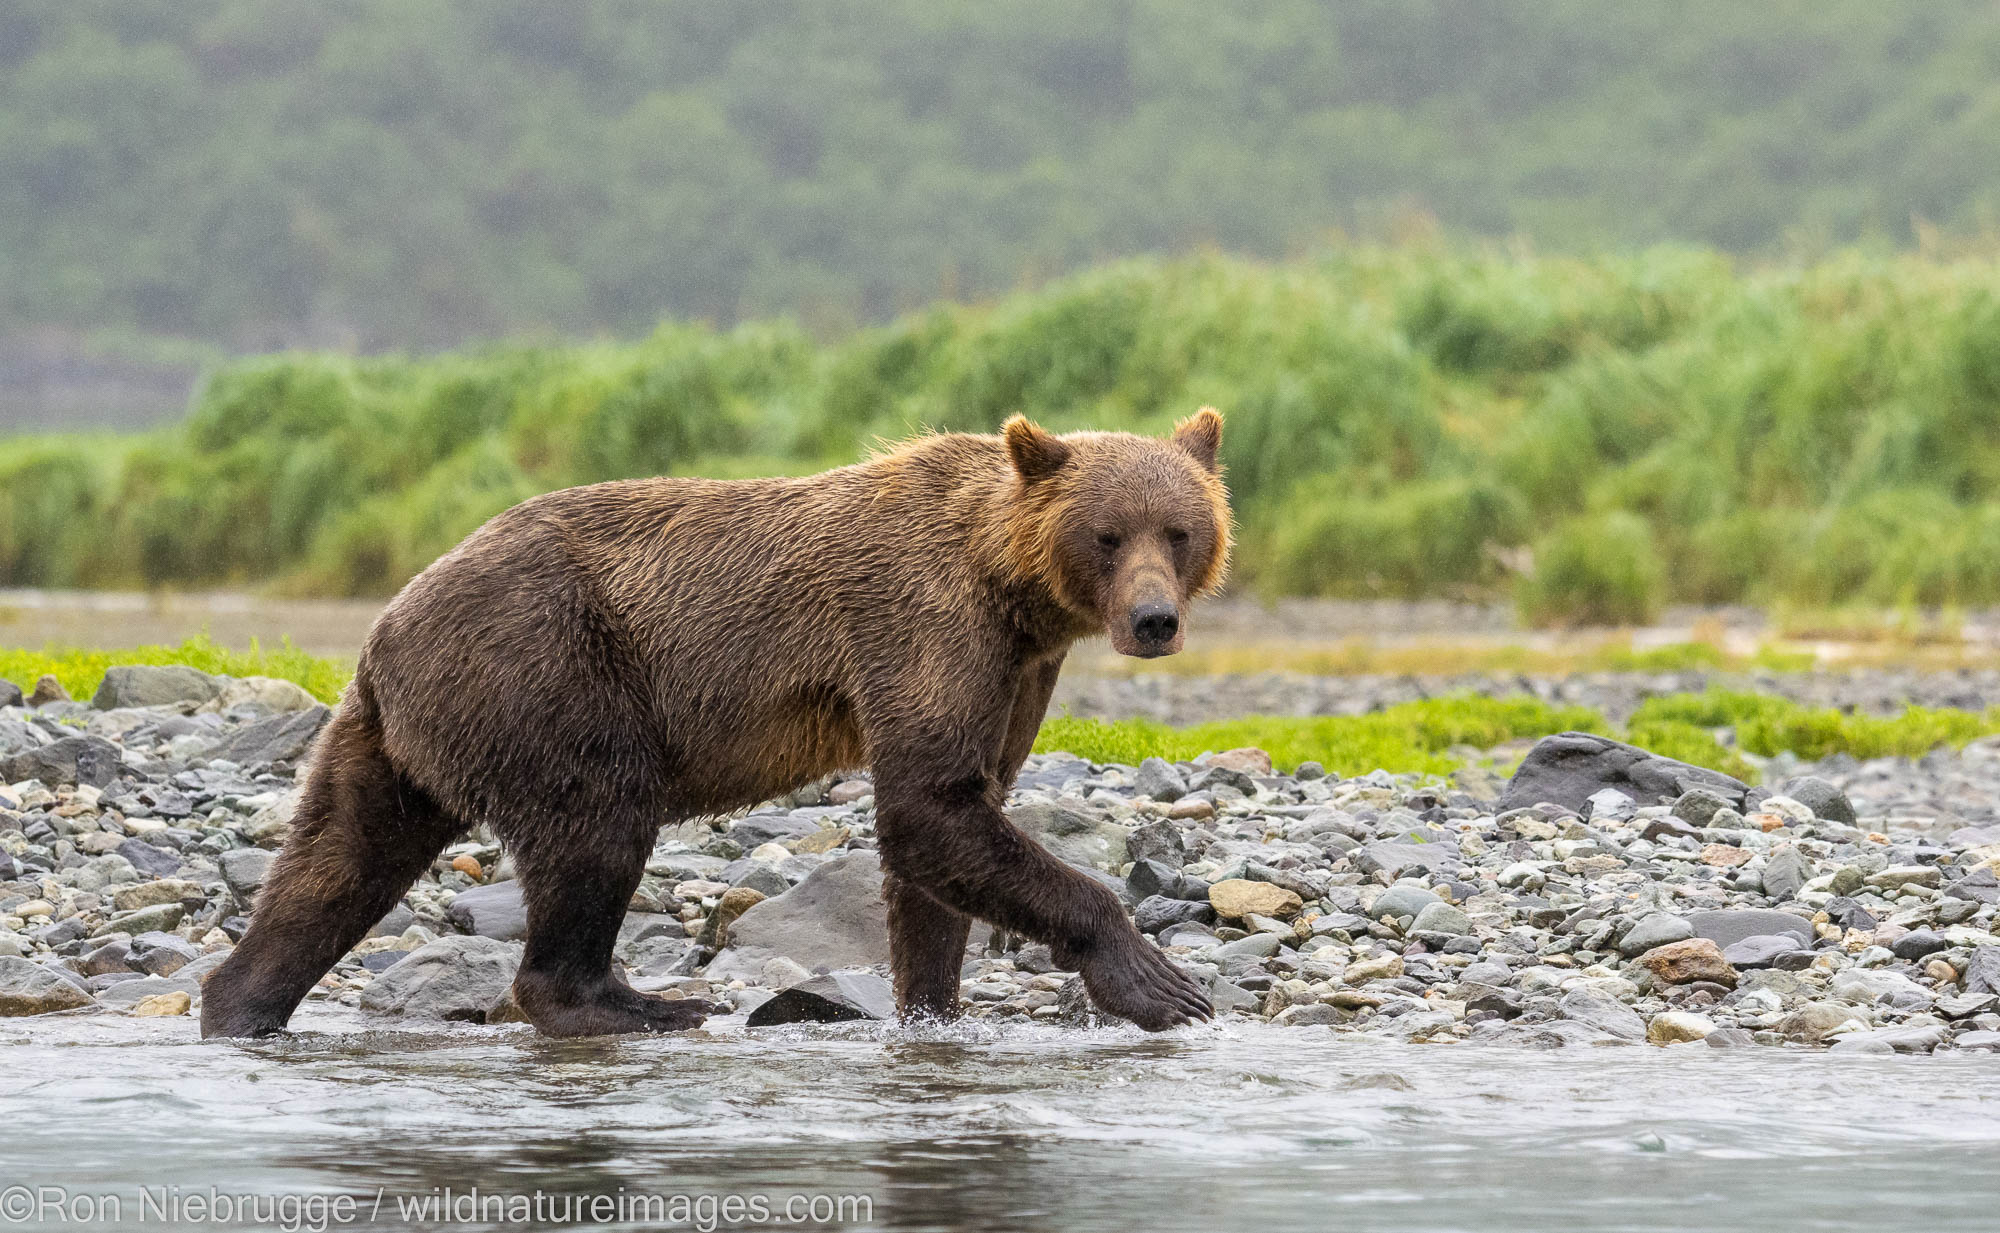 A brown bear in Geographic Harbor, Katmai National Park, Alaska.